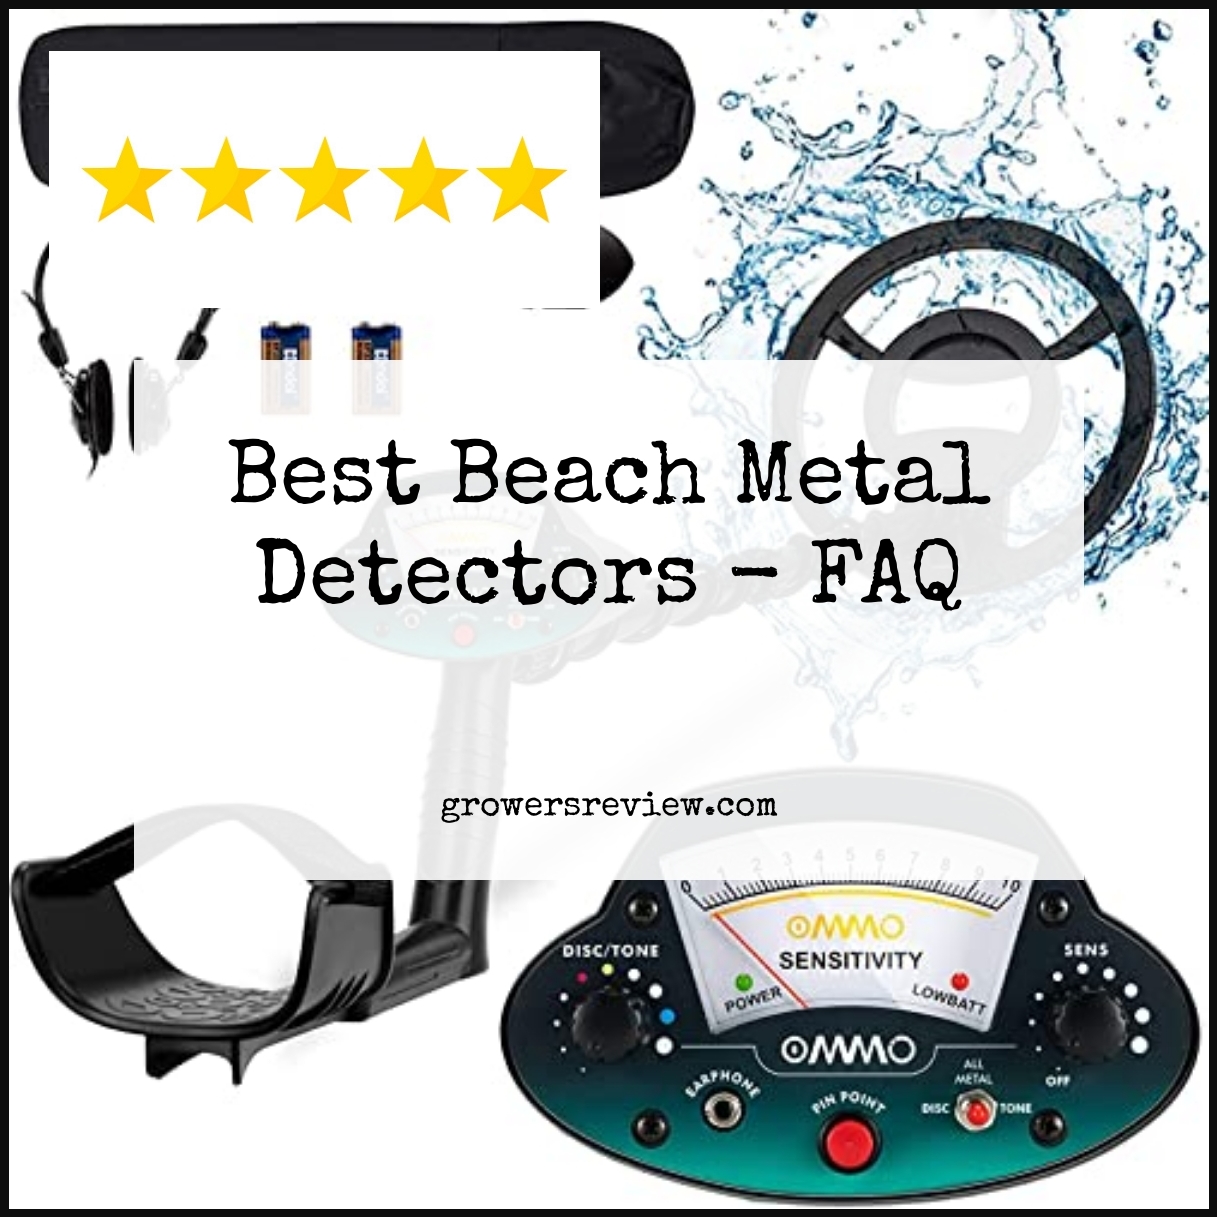 Best Beach Metal Detectors - FAQ